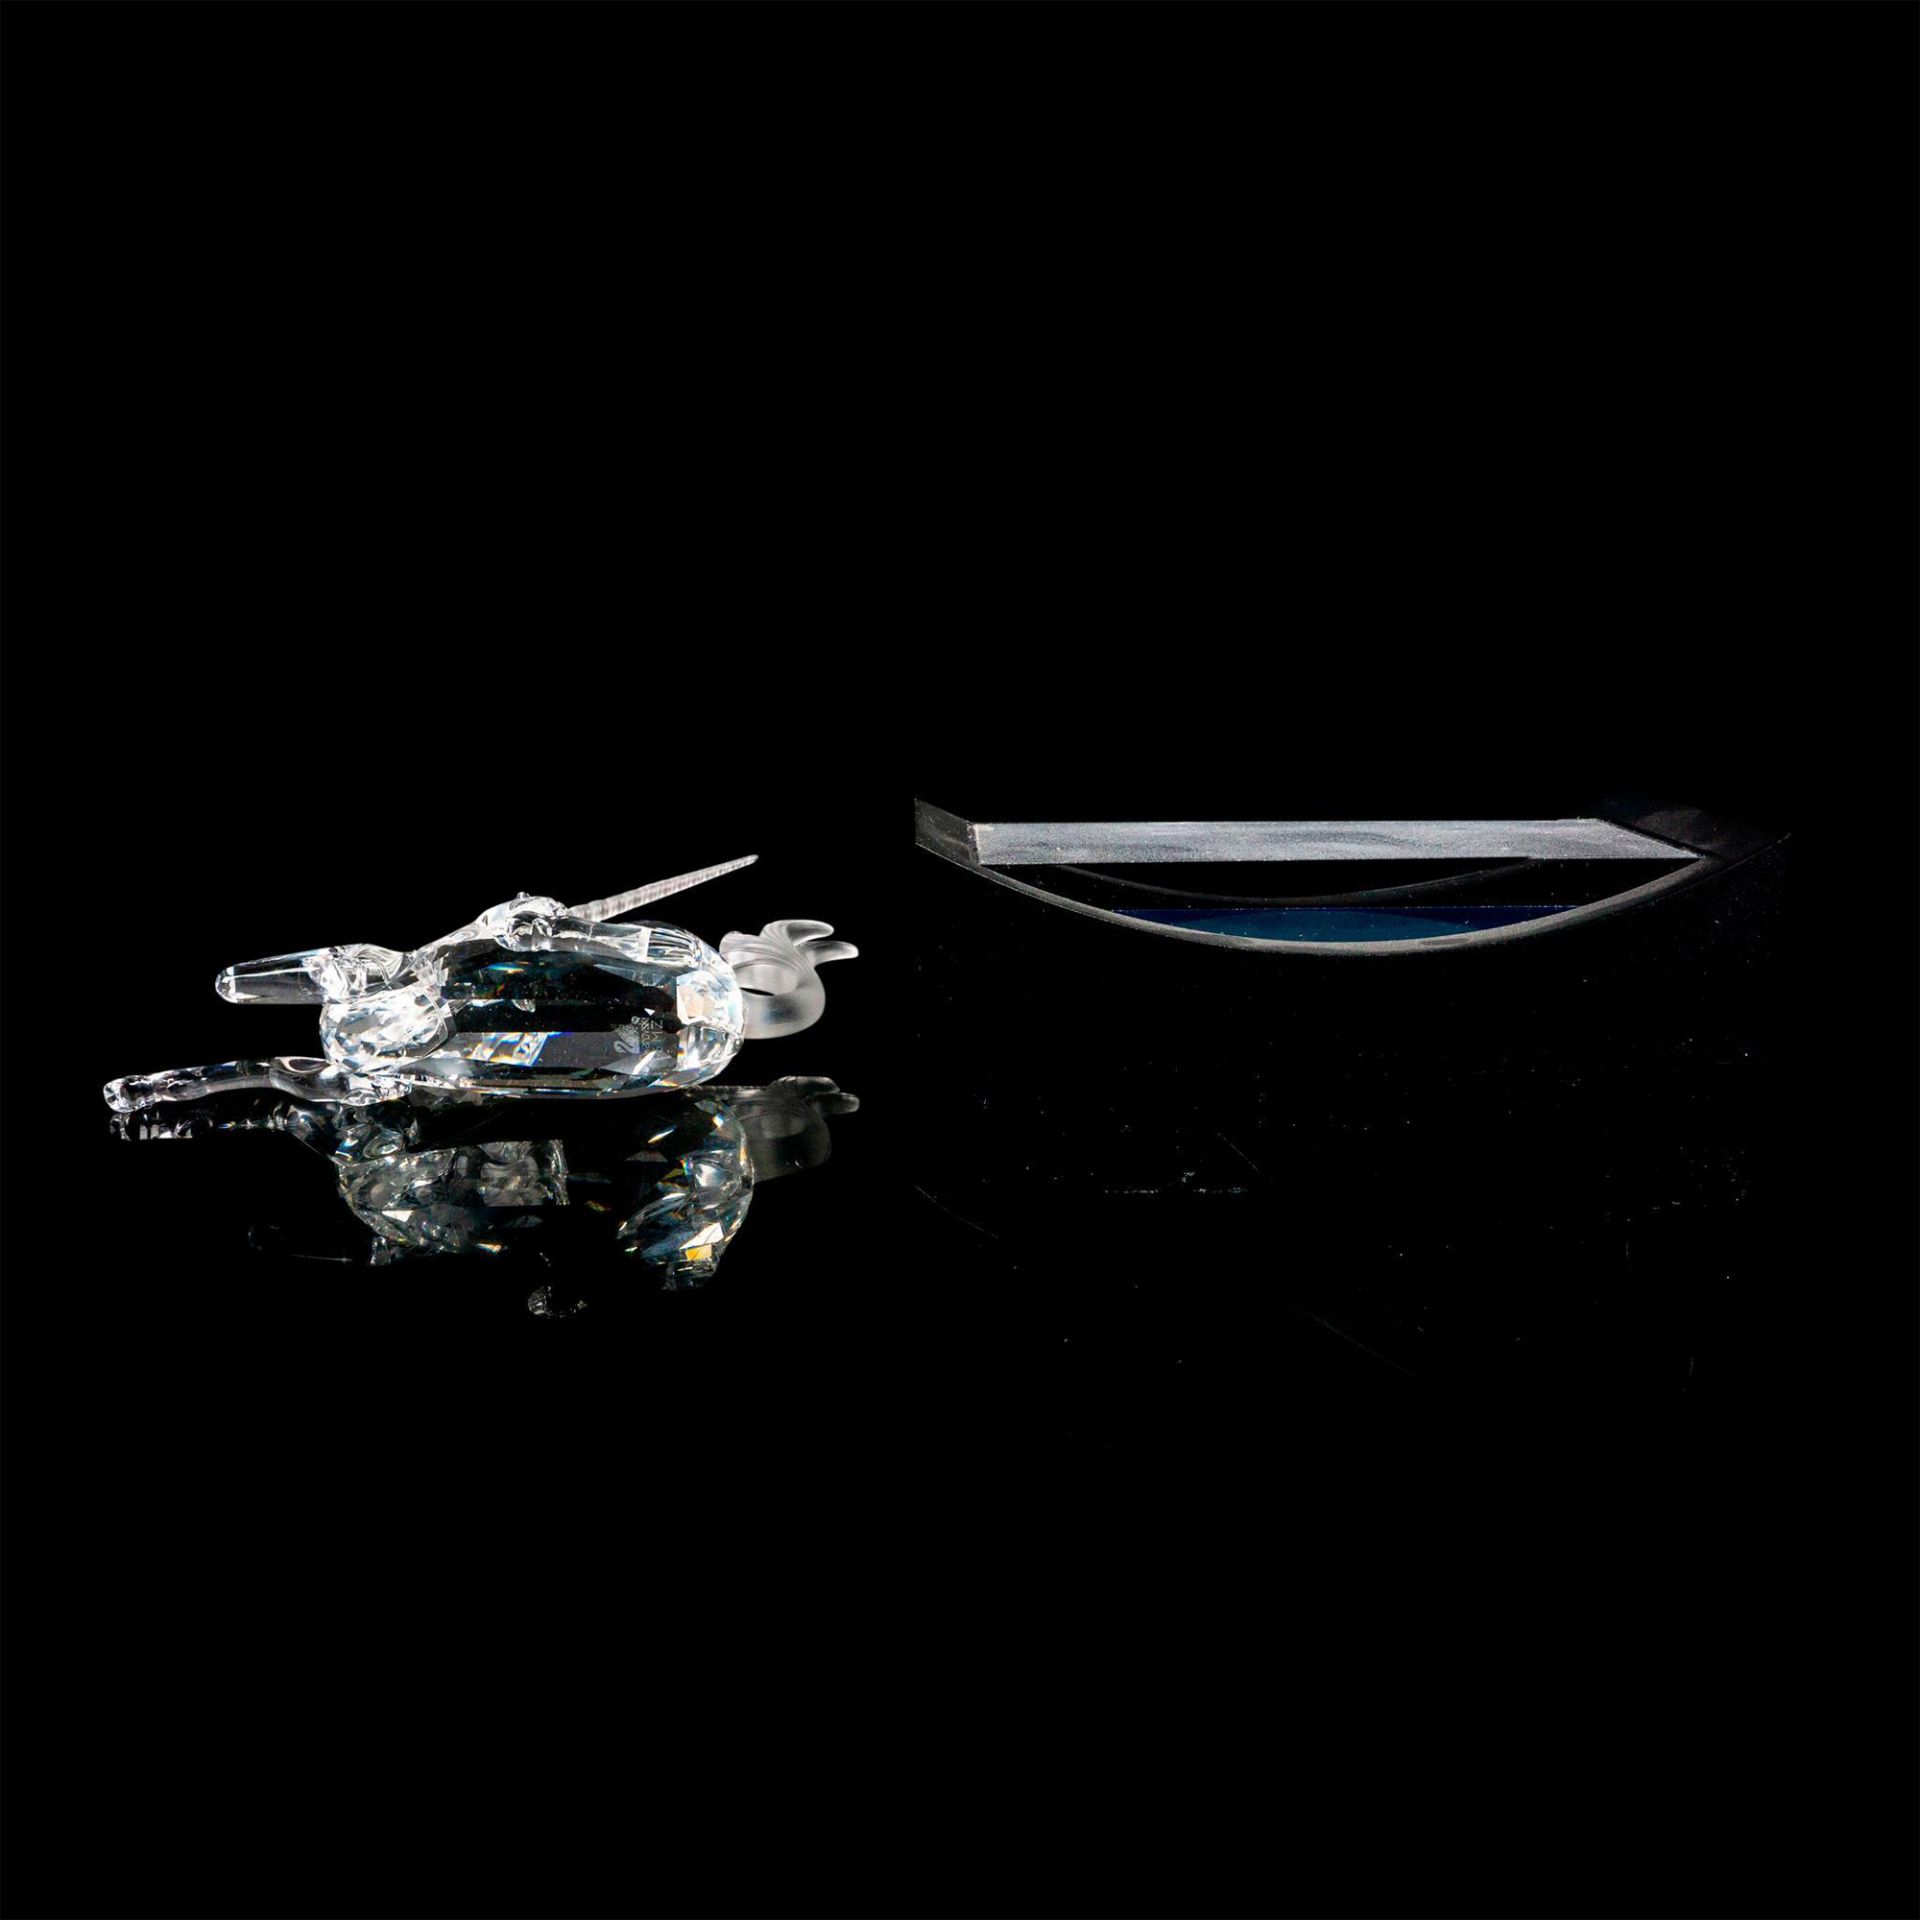 2pc Swarovski Crystal Figurine + Base, Unicorn - Image 3 of 4